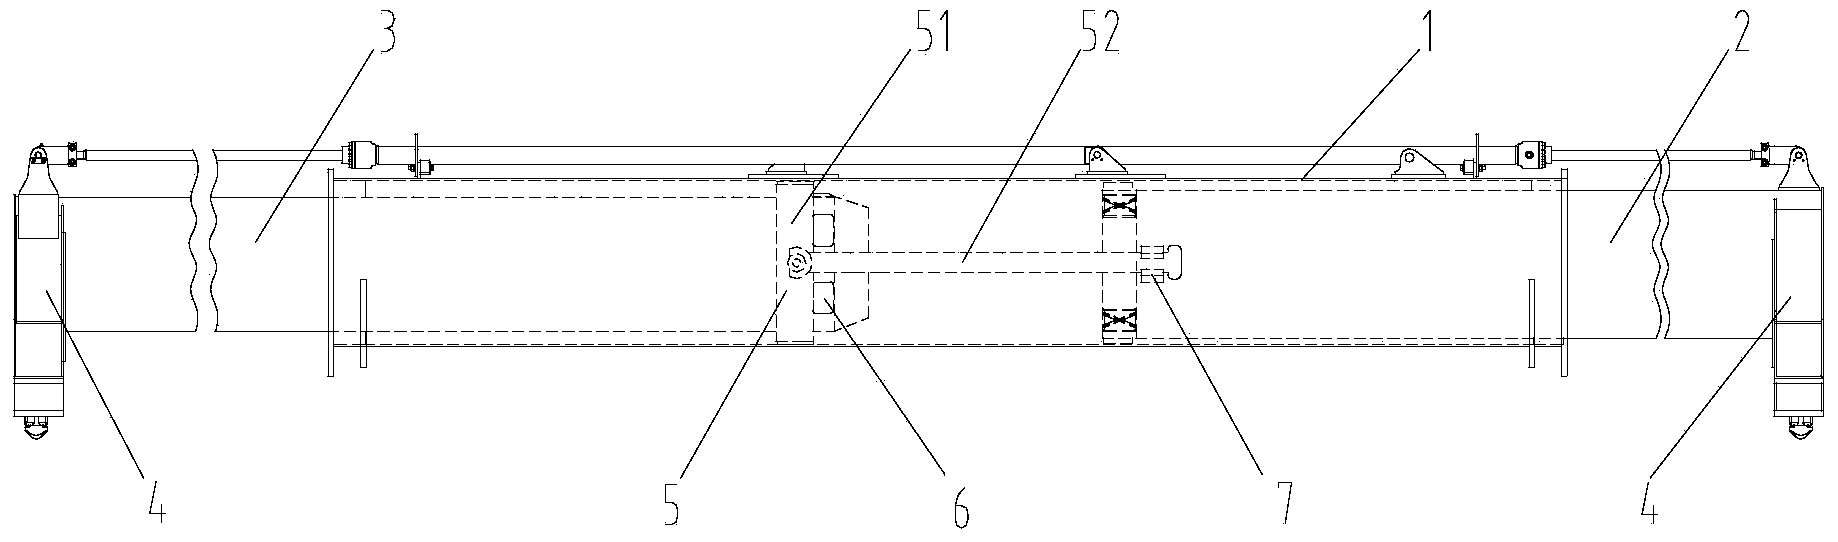 Single-girder hanger and reach stacker